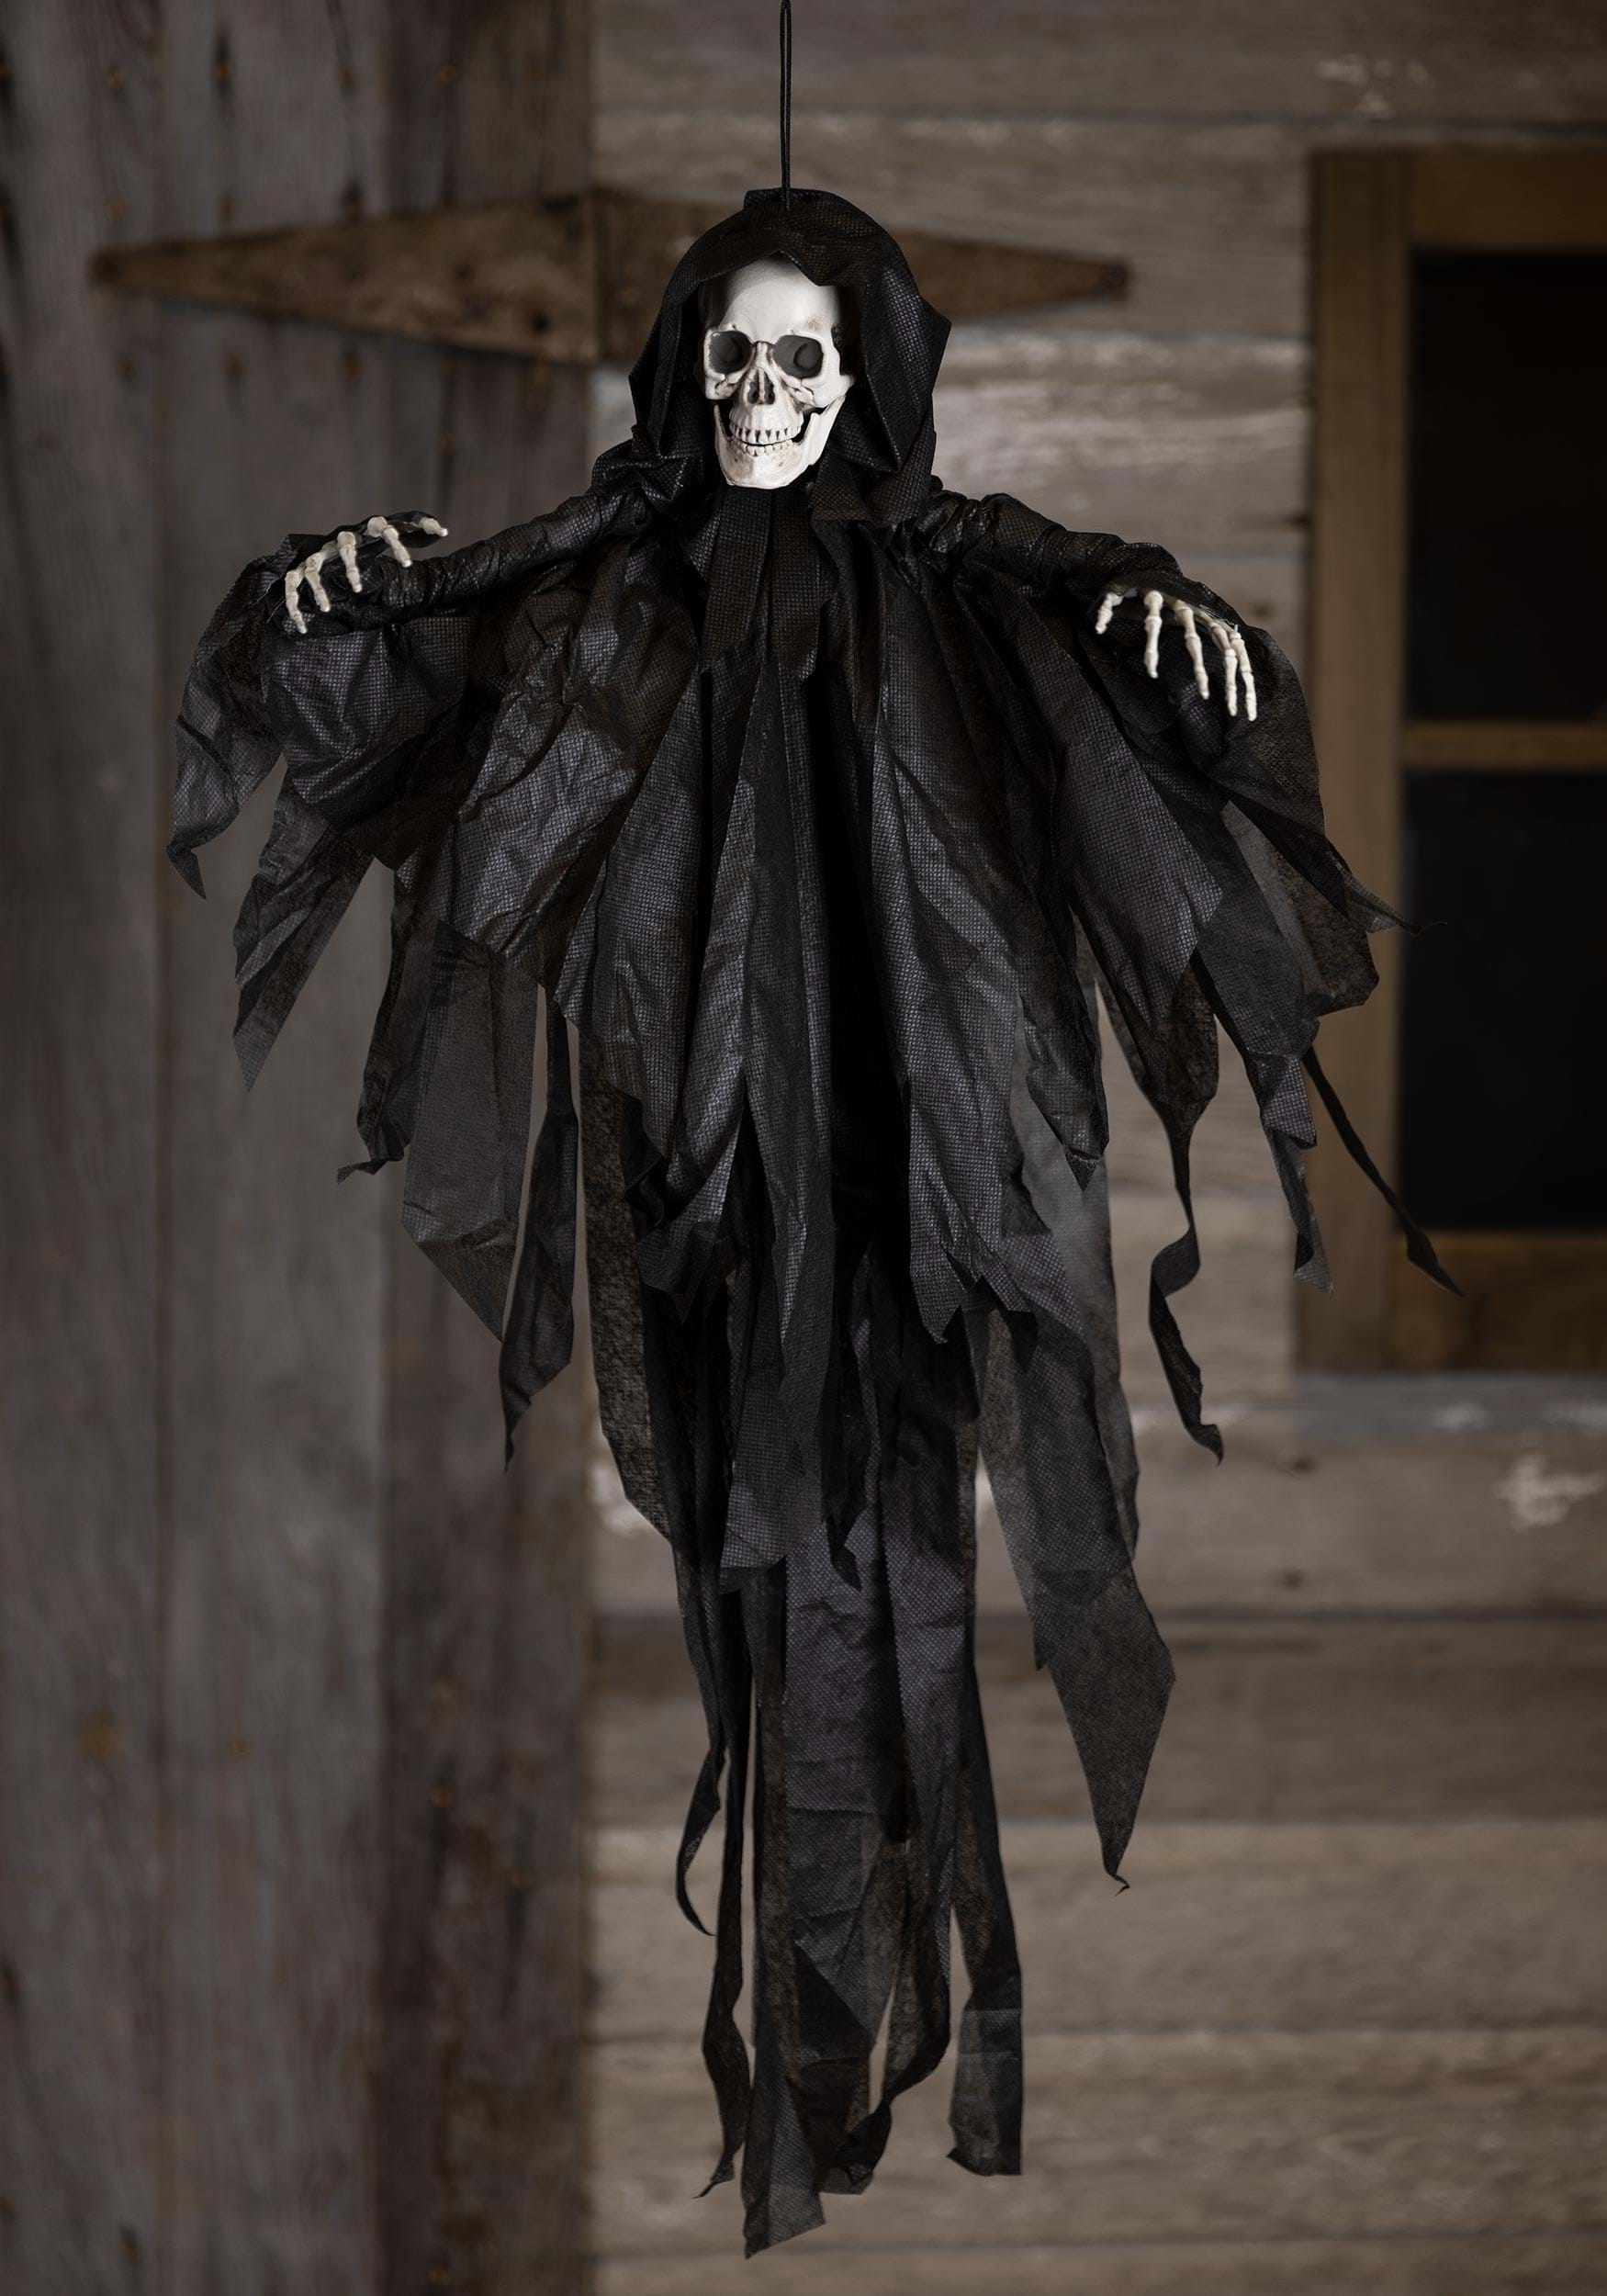 Black Hanging Reaper Halloween Decoration